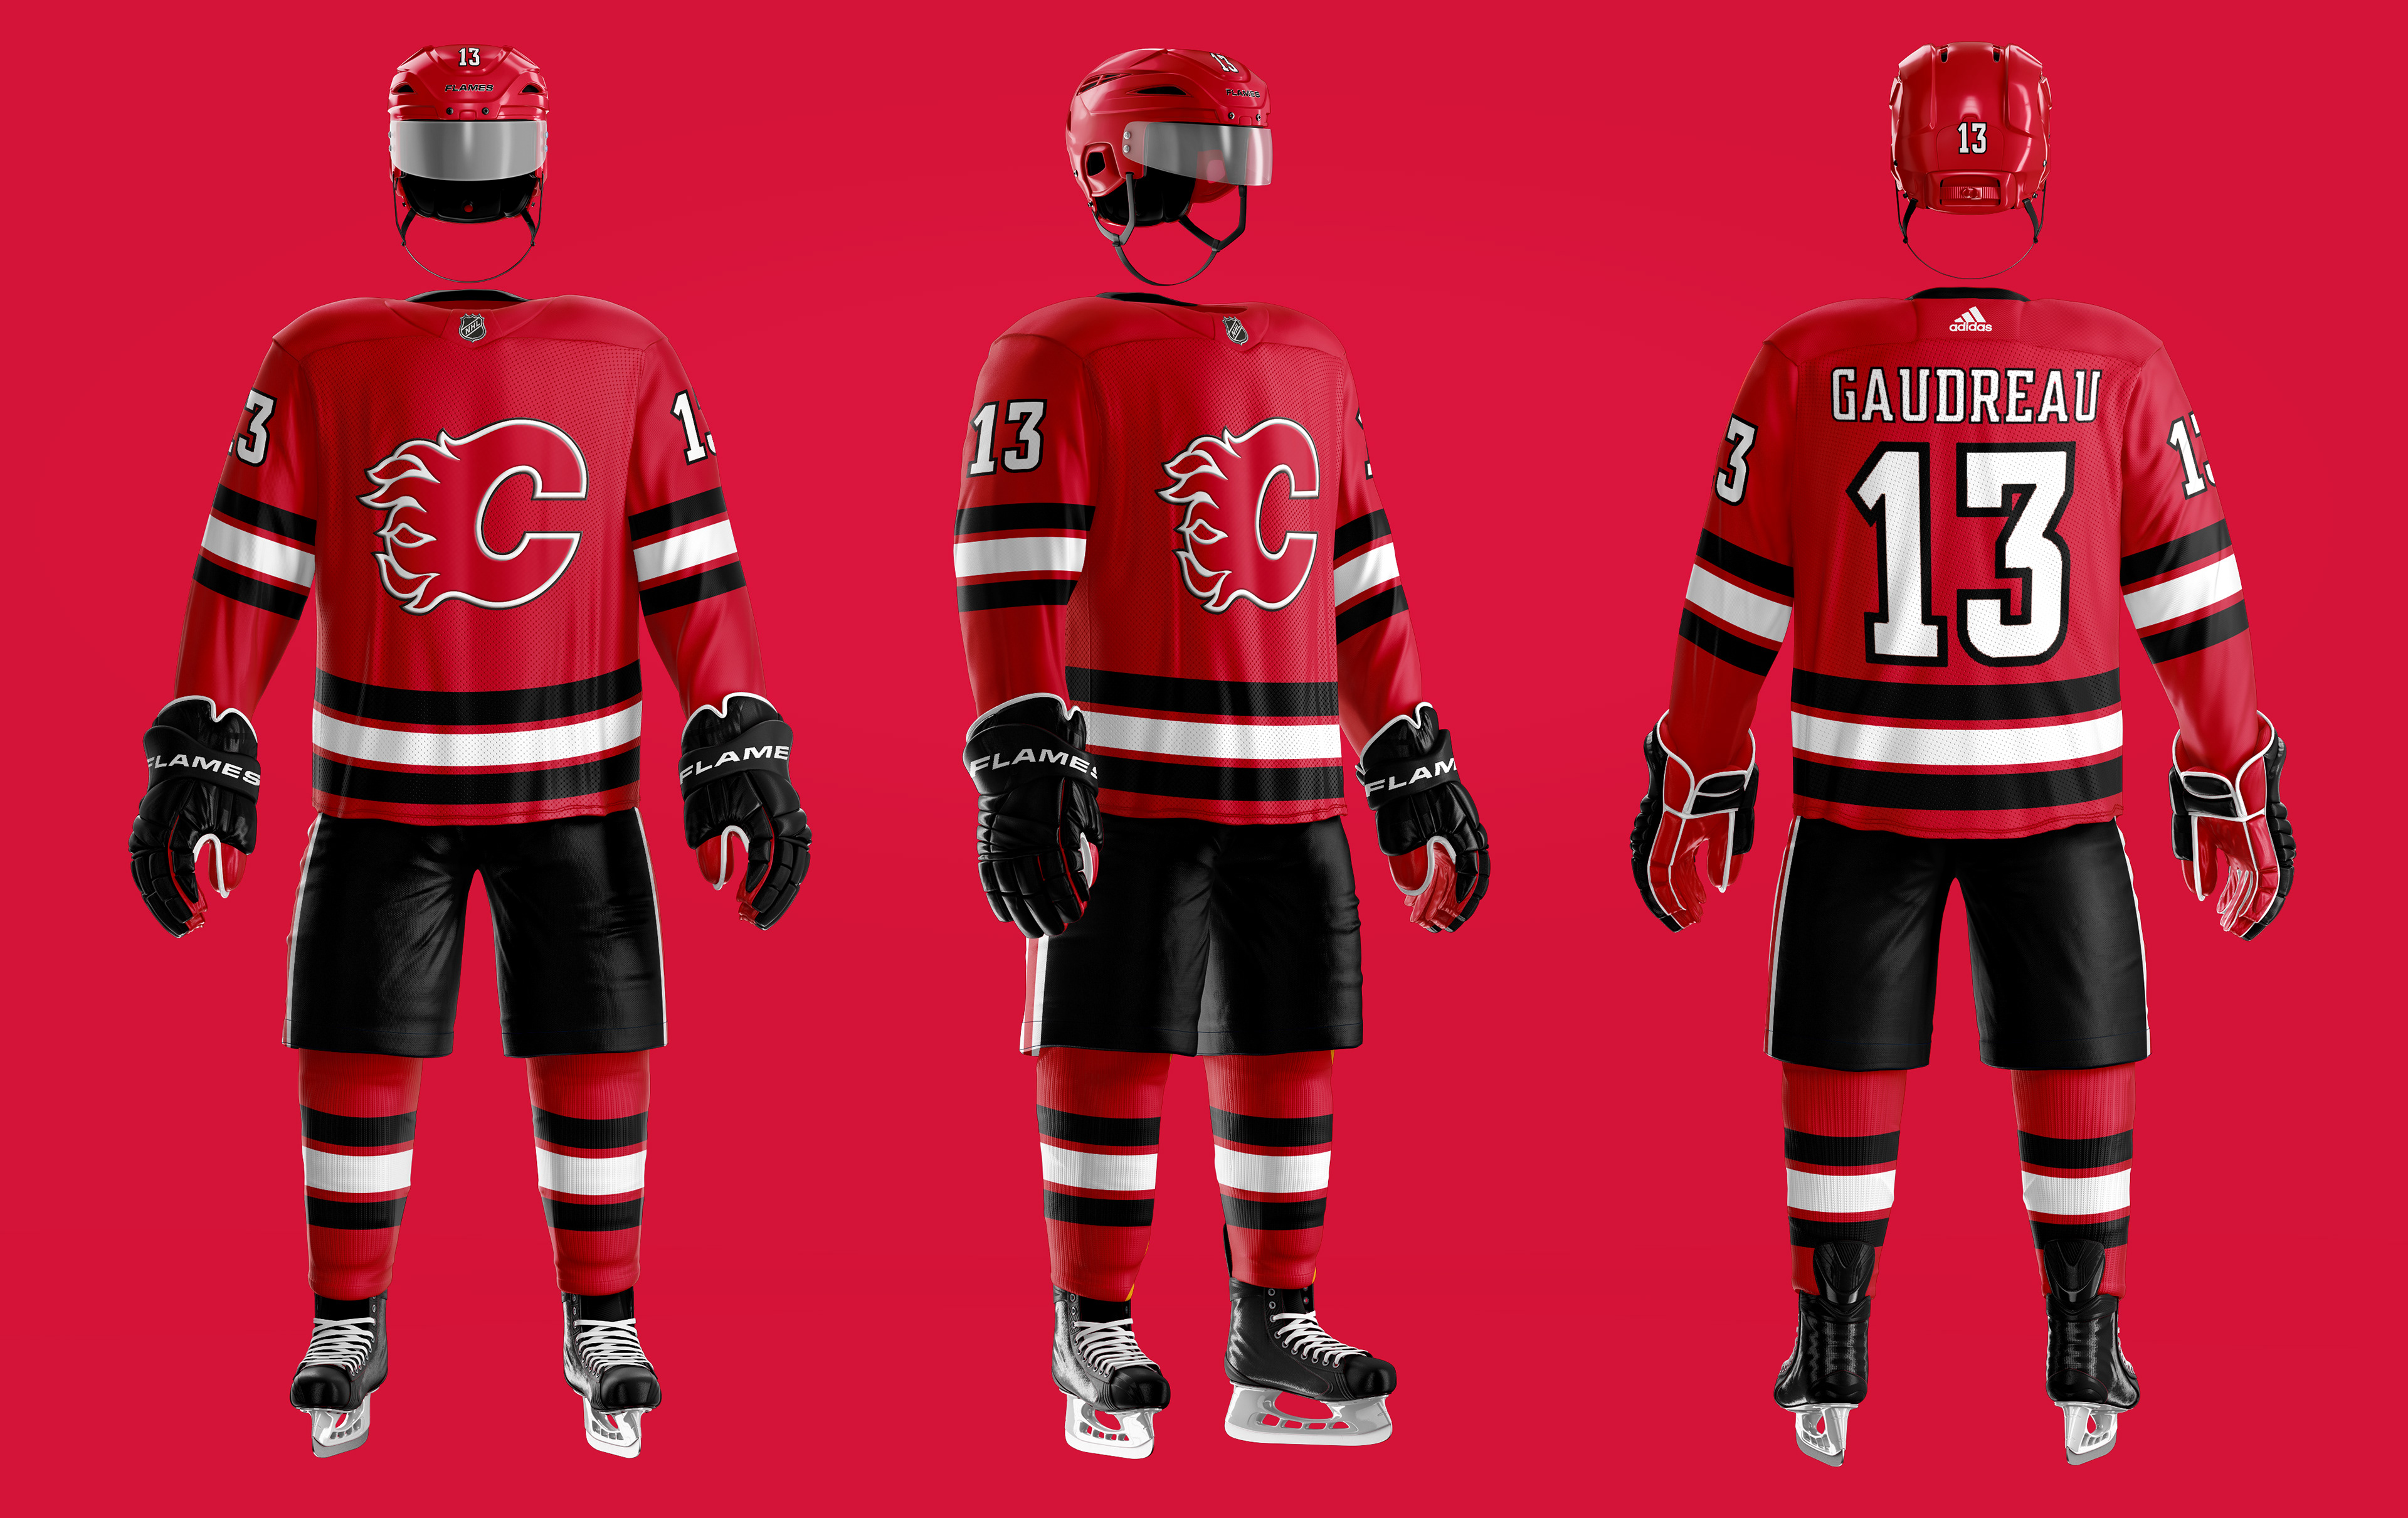 Chris Ramirez - NHL / NFL-CFL Crossover Uniform Concept Series